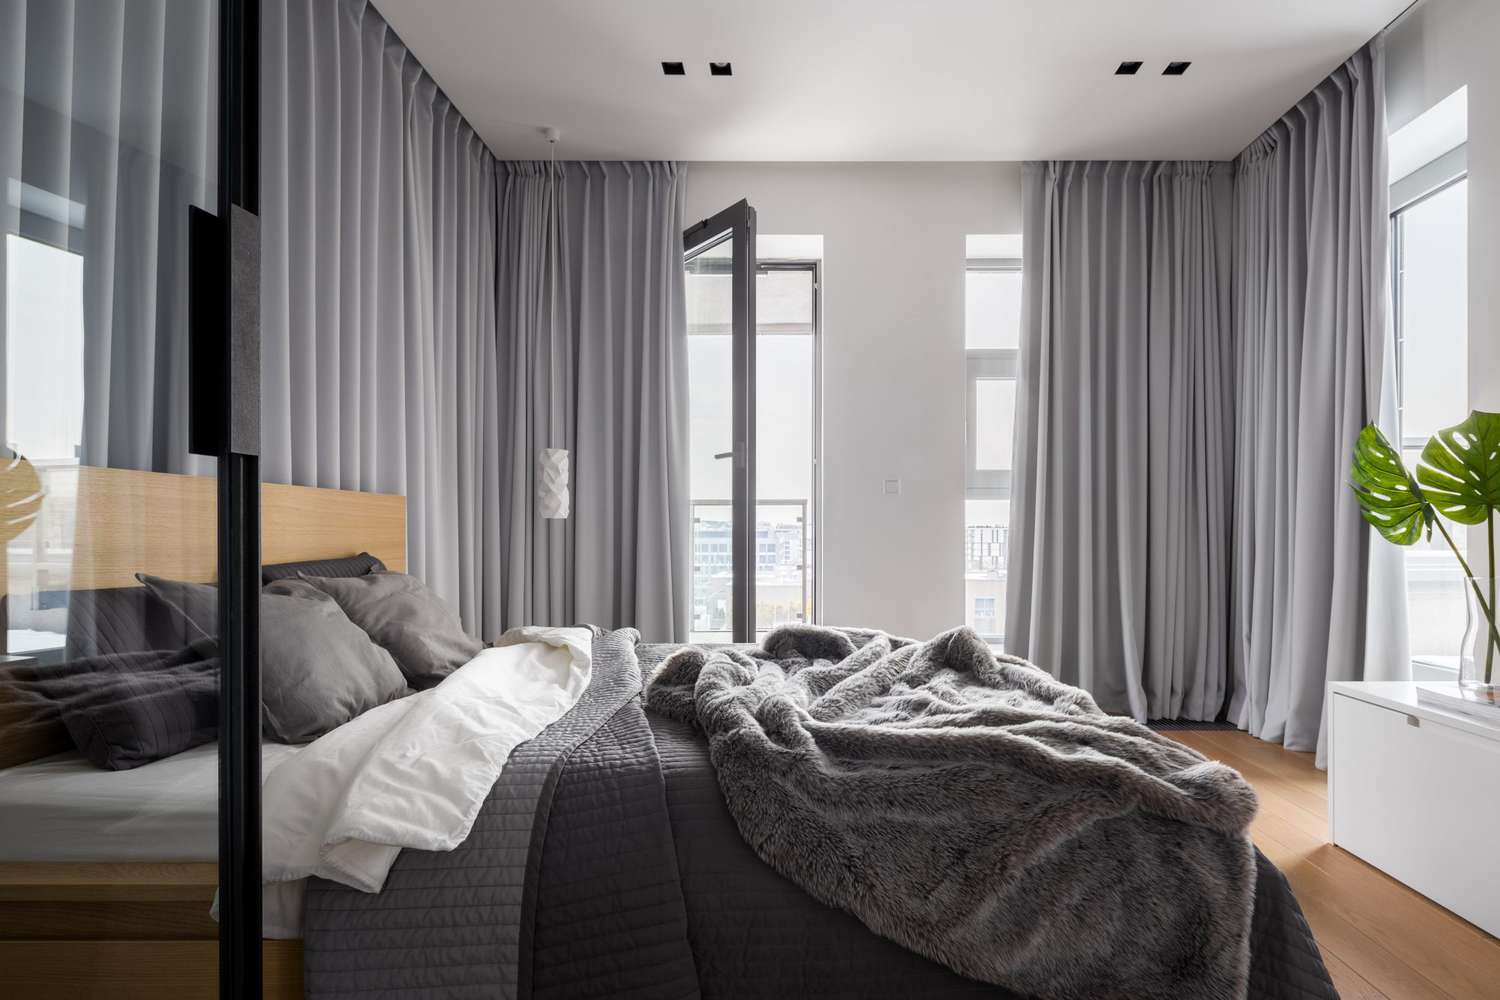 Luxury bedroom interior blackout curtains